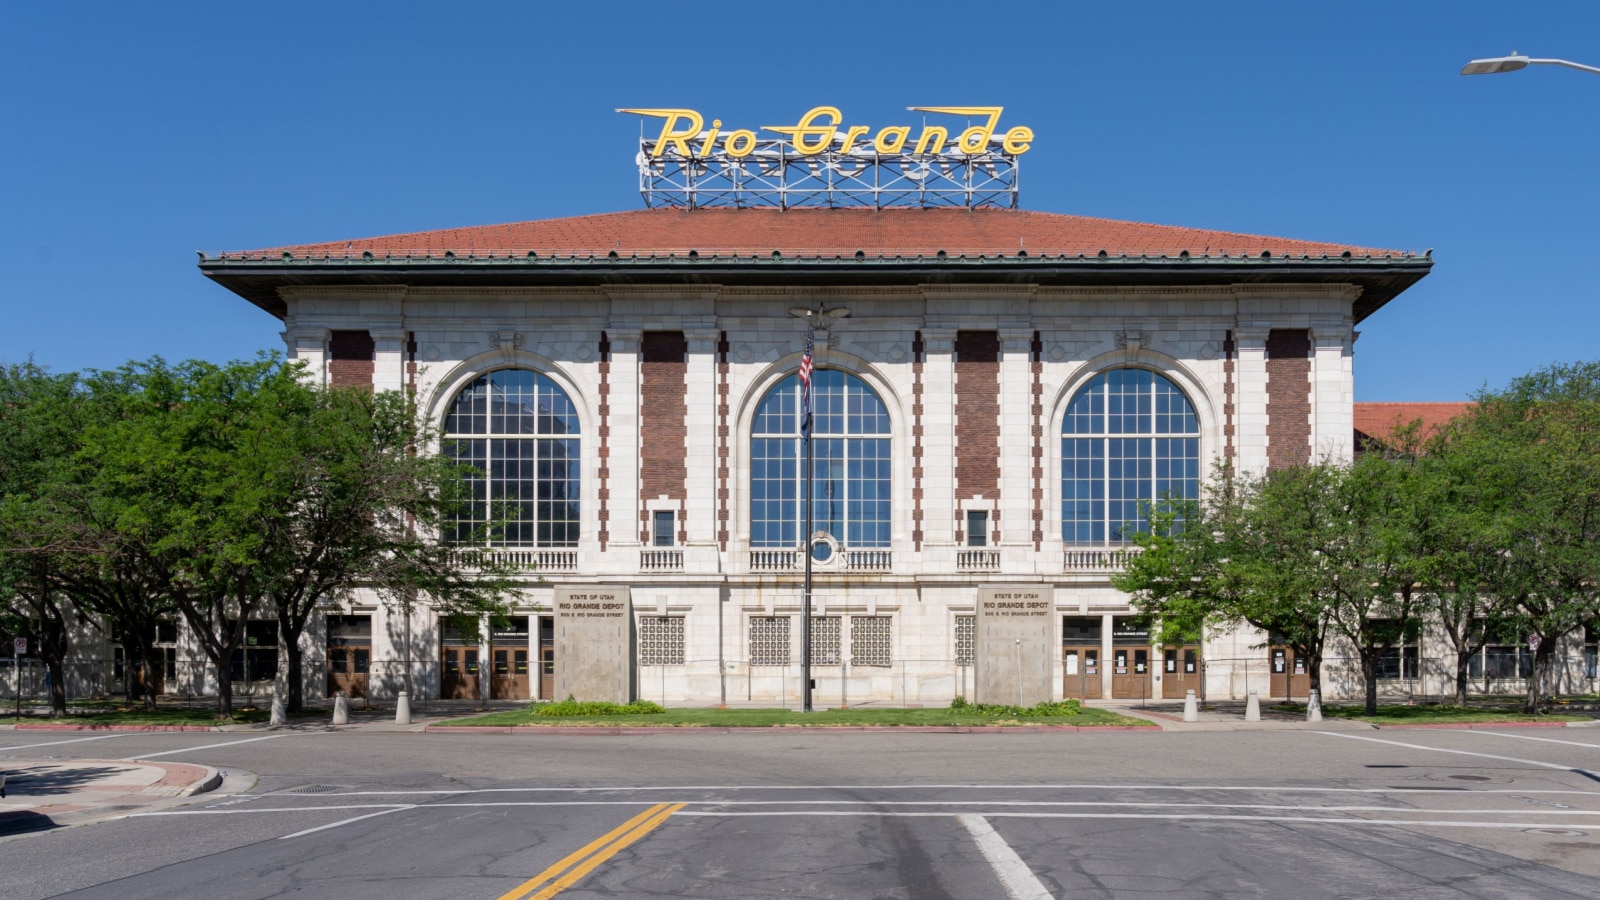 Rio Grande Depot building in Salt Lake City, Utah, USA - June 27, 2023. The Rio Grande Depot was constructed in 1910.